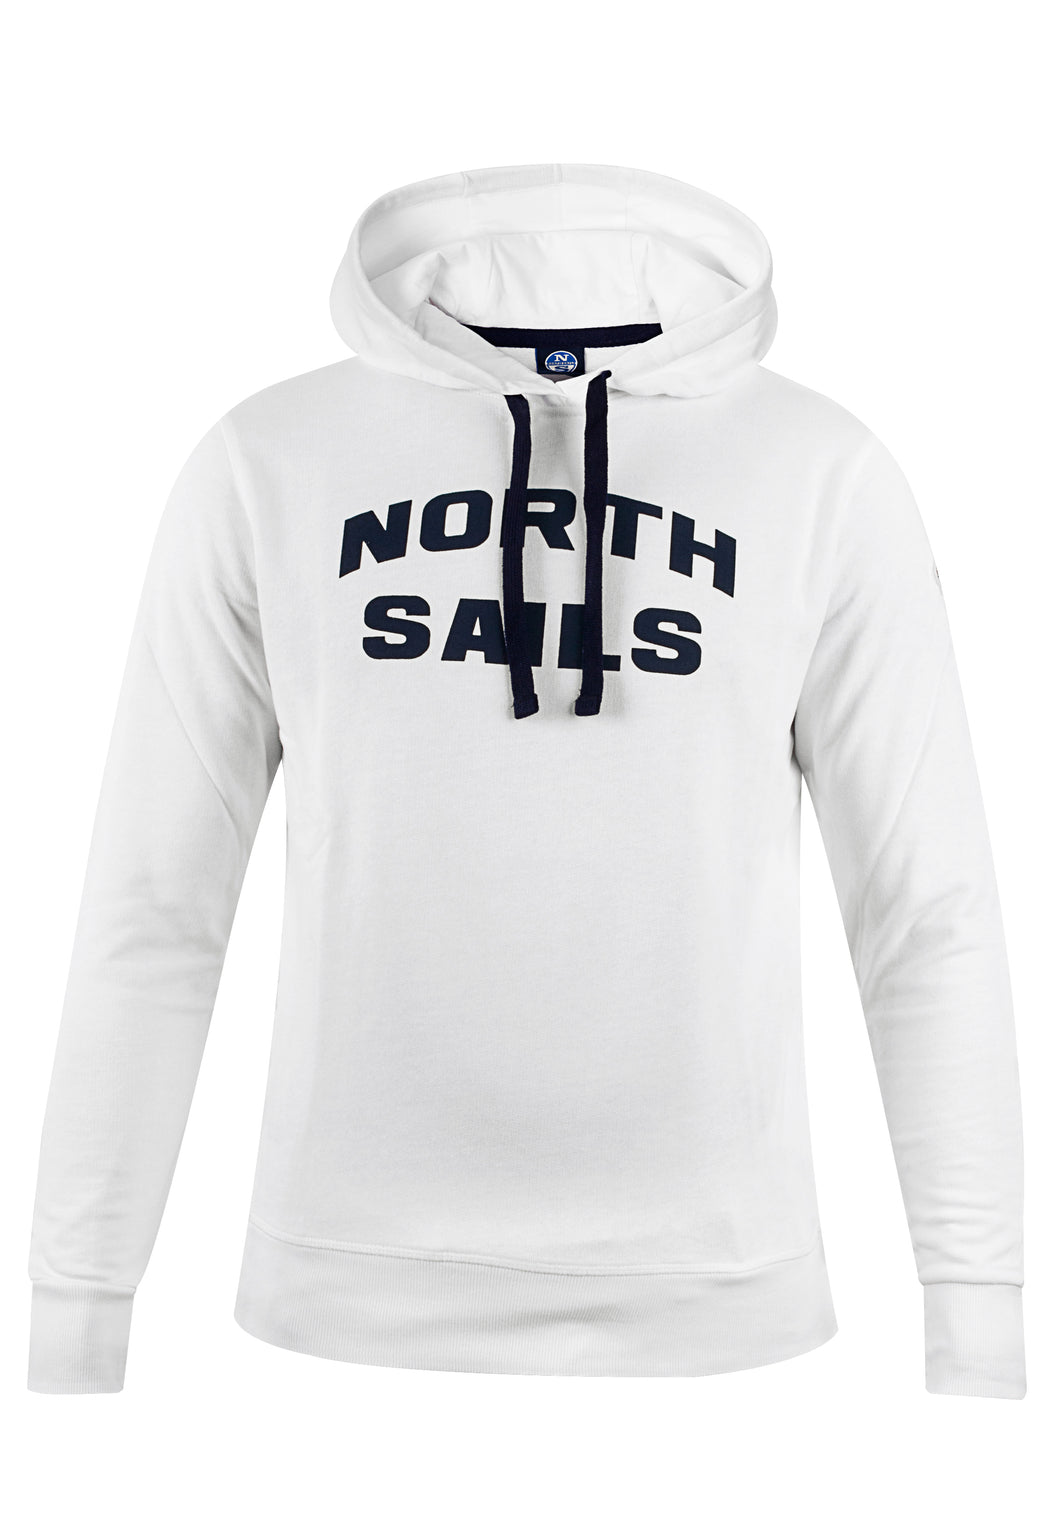 North Sails Herren Hoodie | HOODED W/ GRAPHIC